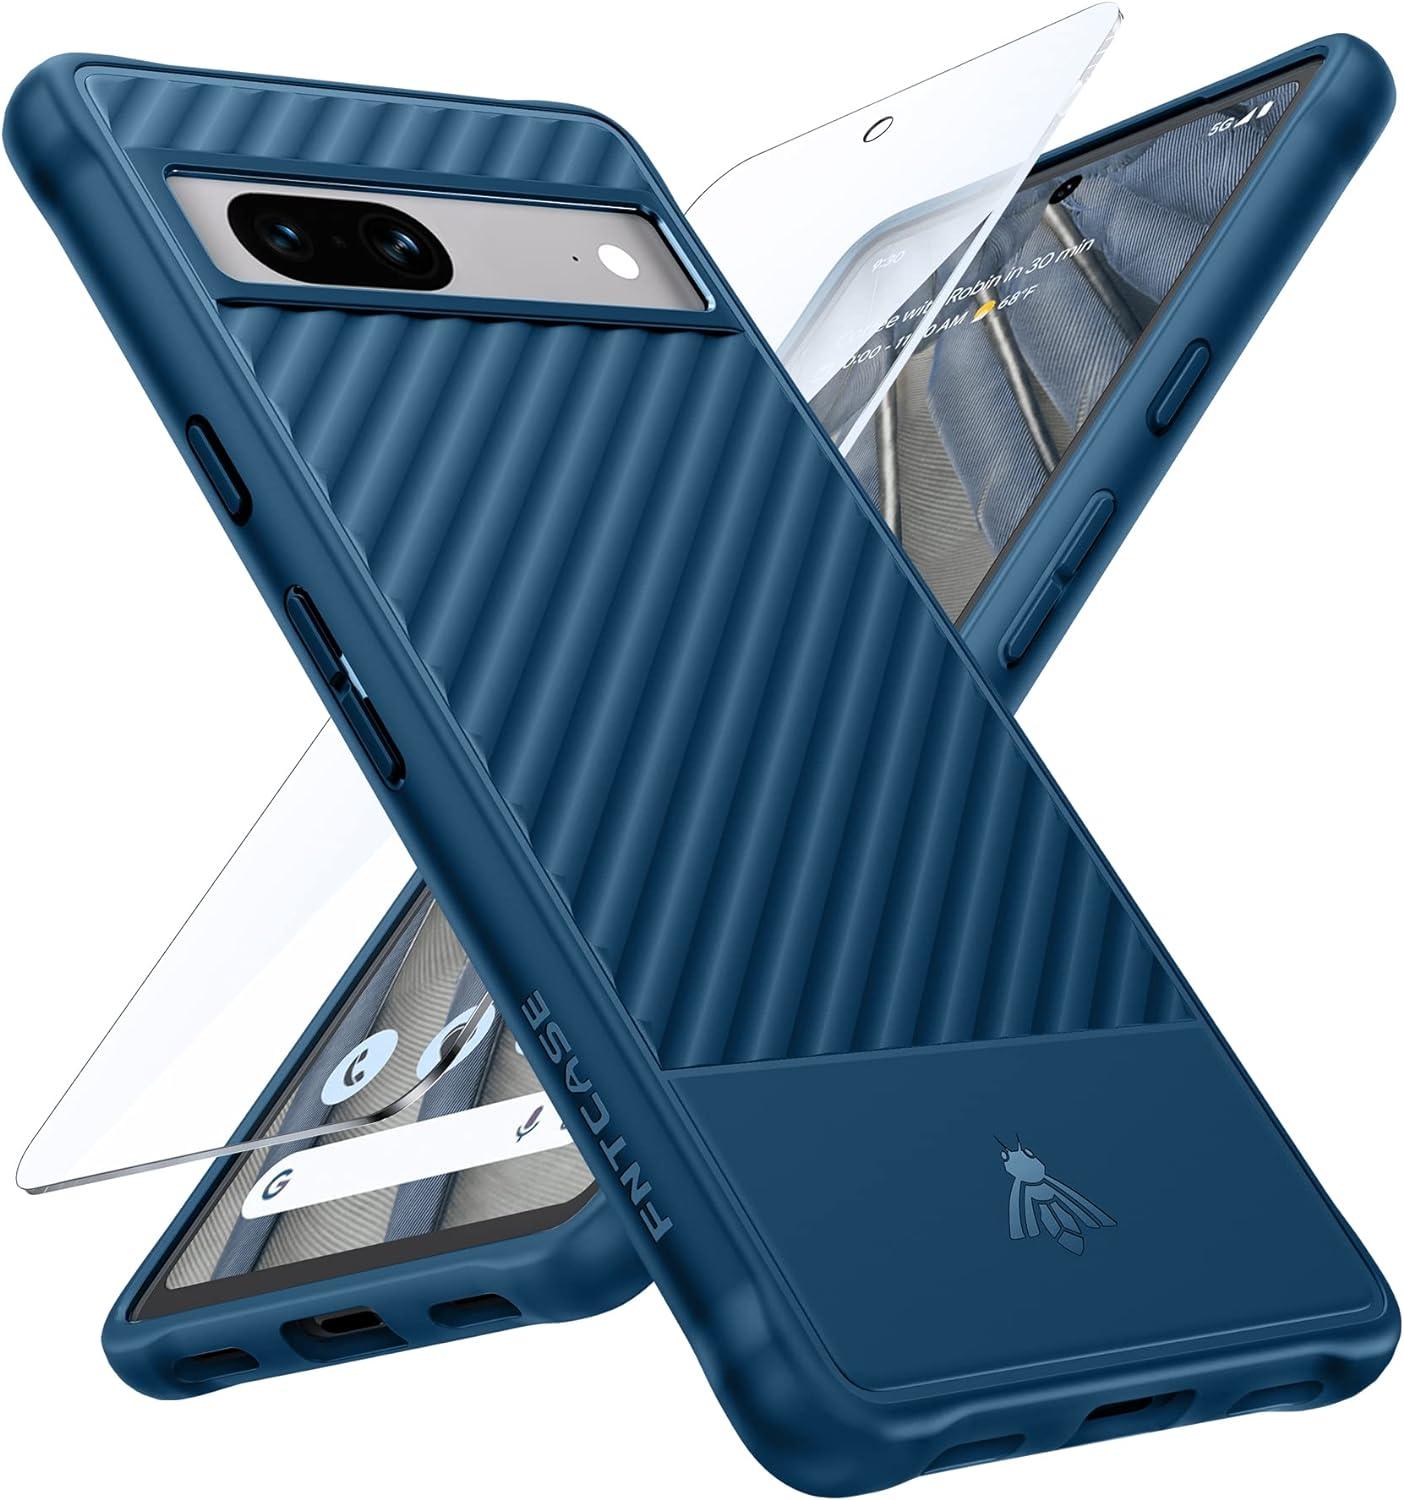 Pixel 7a Case: Slim Durable Shockproof Protective Cell Phone CasePixel 7a Case: Slim Durable Shockproof Protective Cell Phone Case